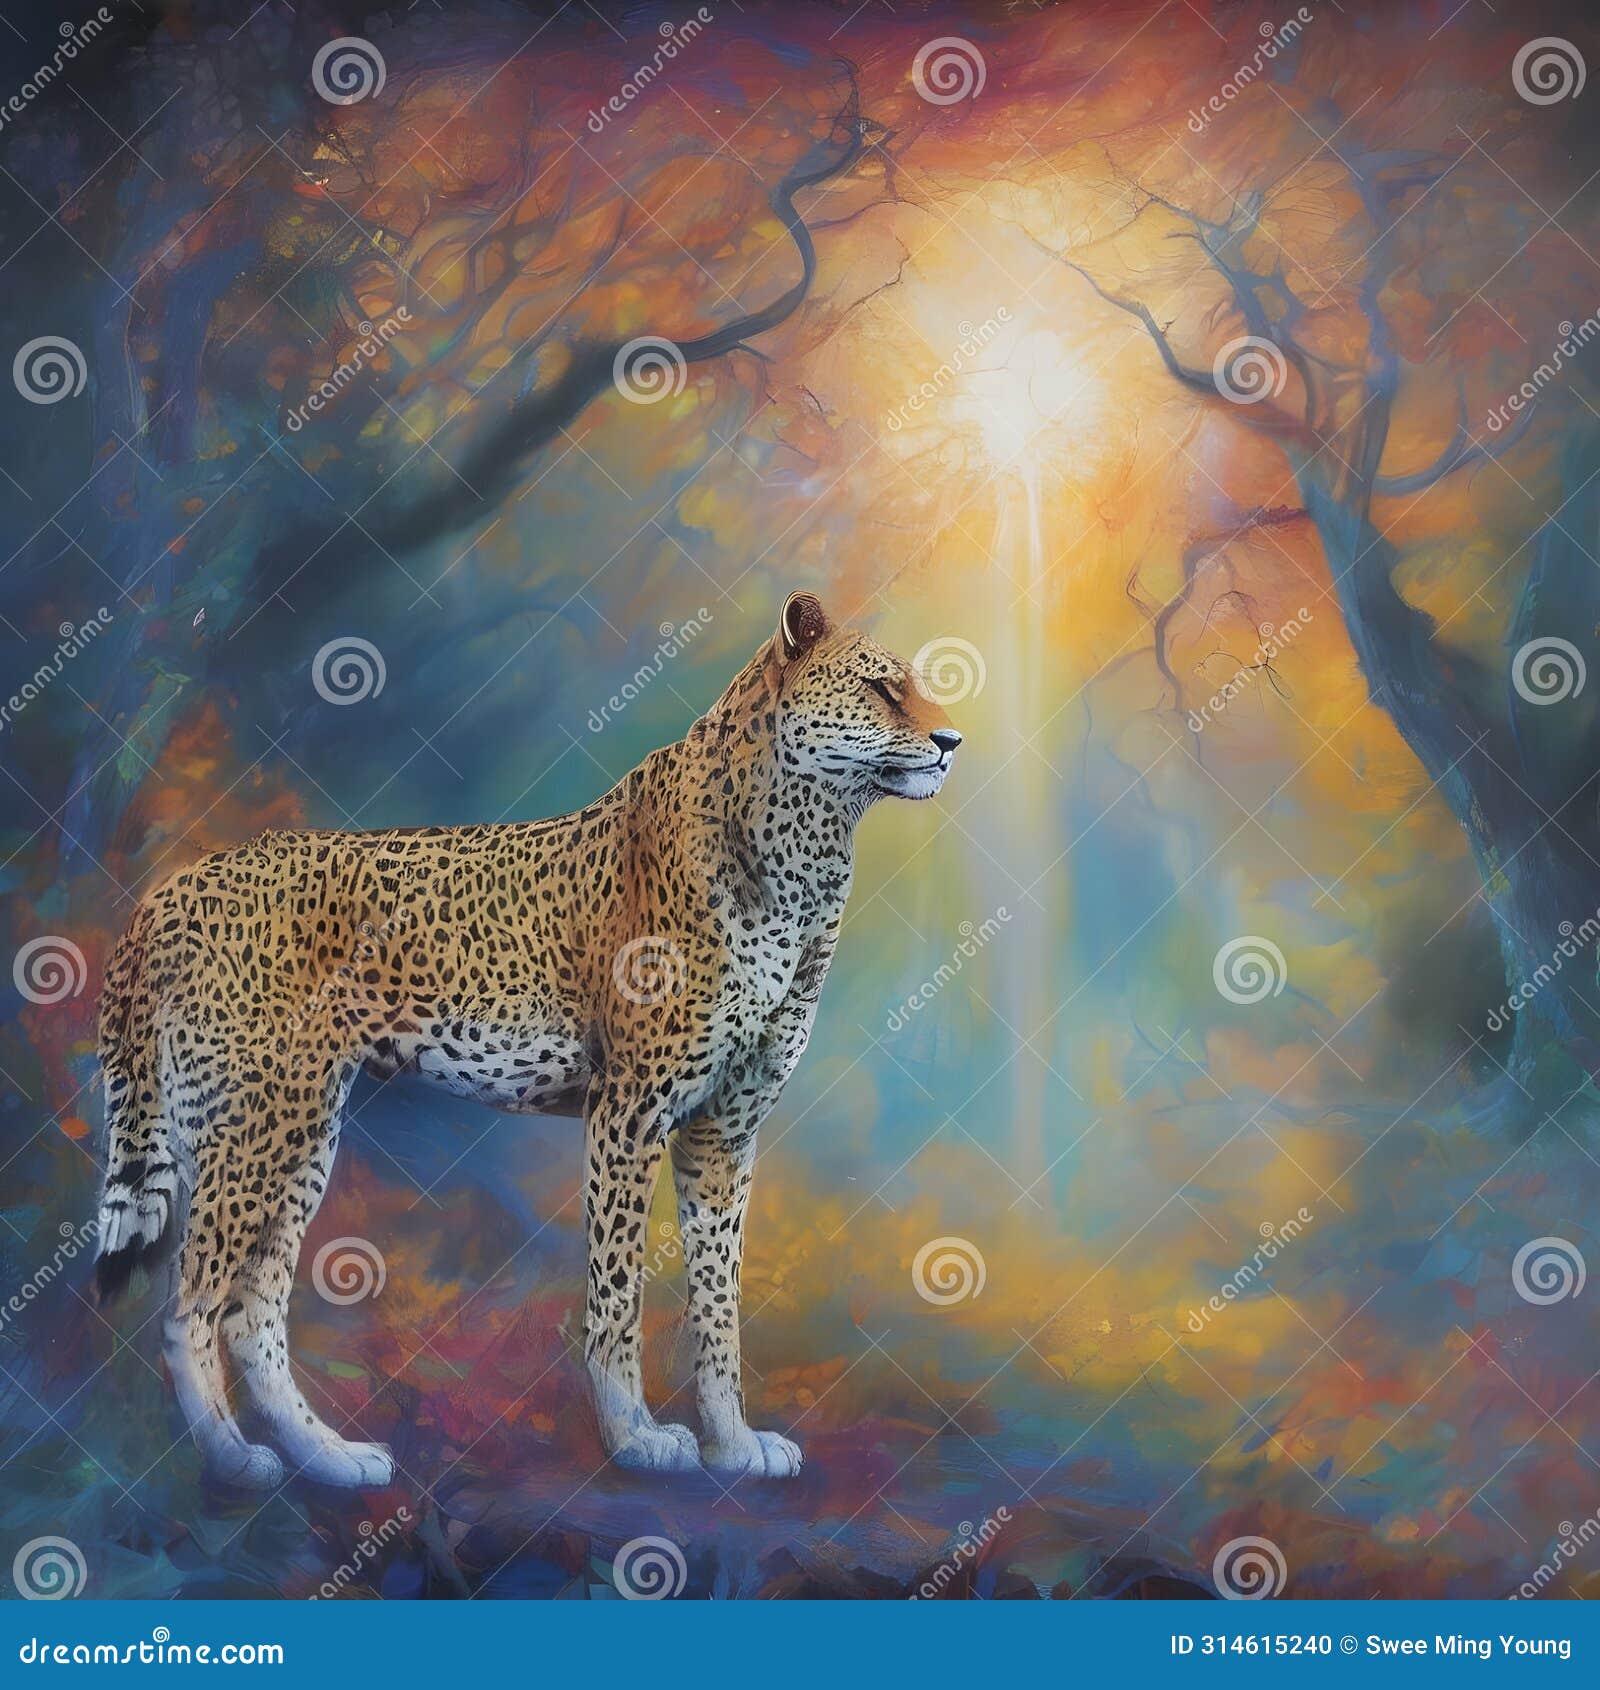 image of matte painting of transcendental art wildlife mood.